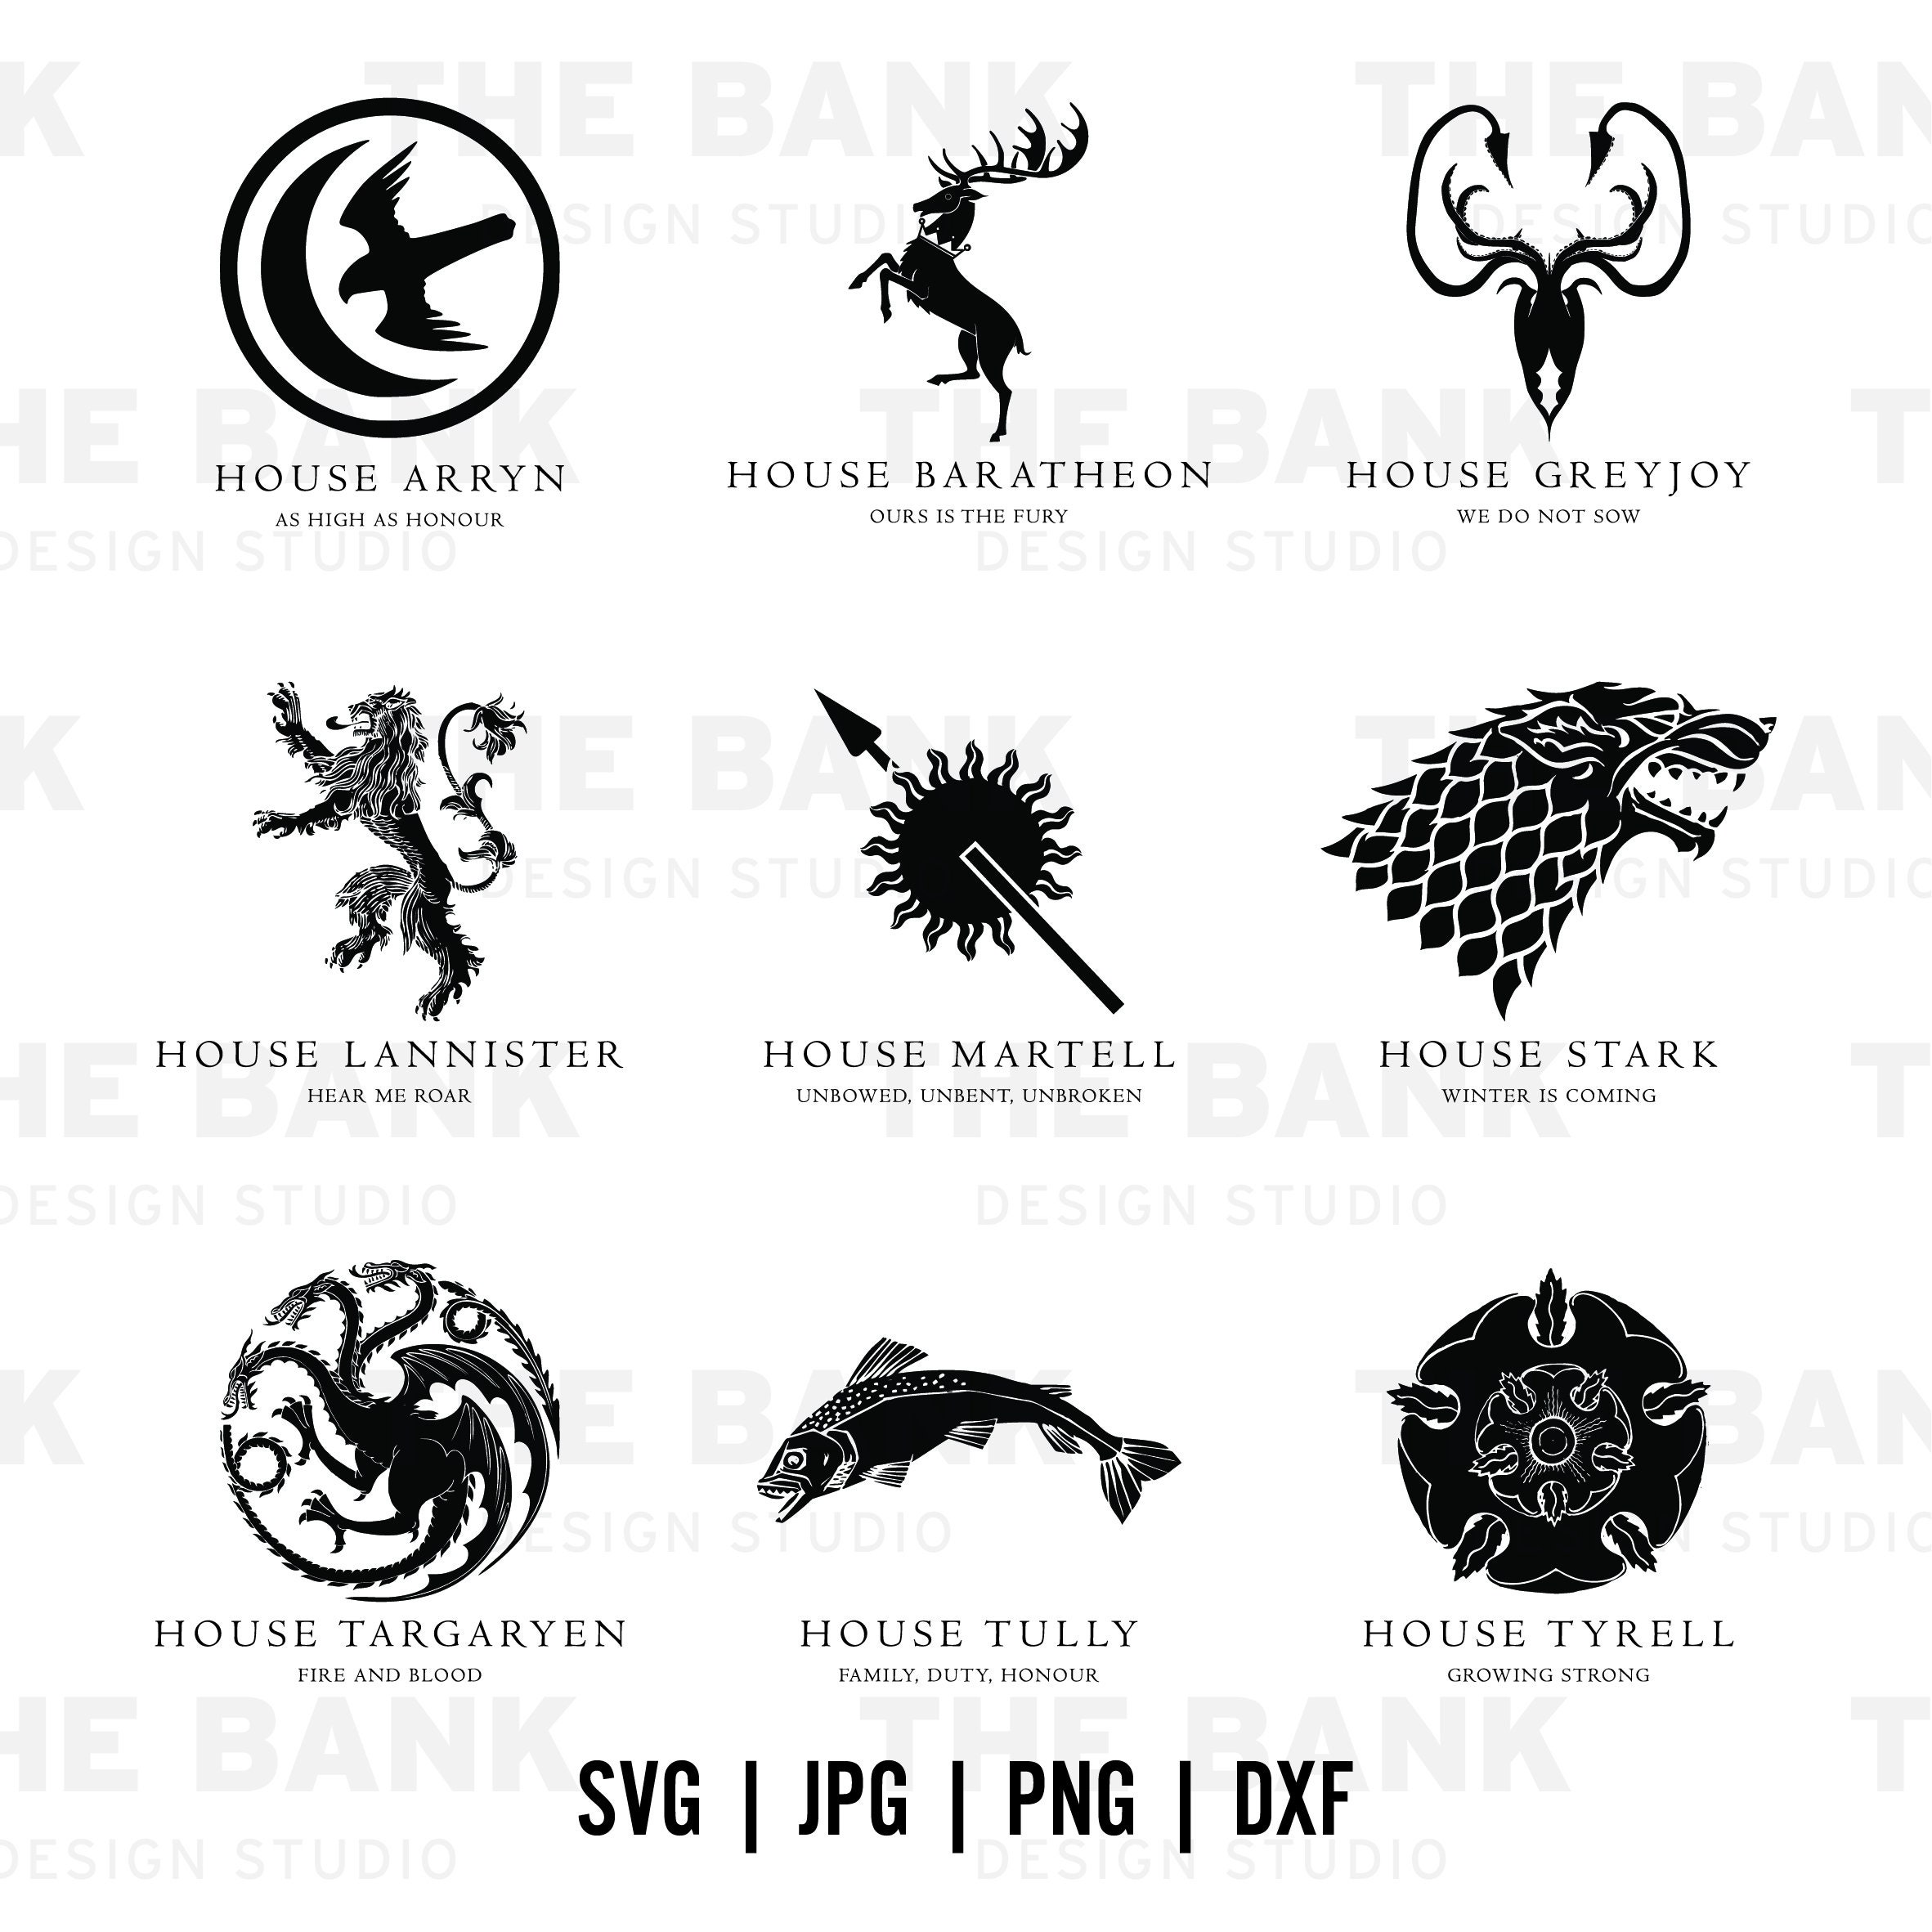 Game Of Thrones svg, Game Of Thrones Big Bundle svg, 1000 Designs